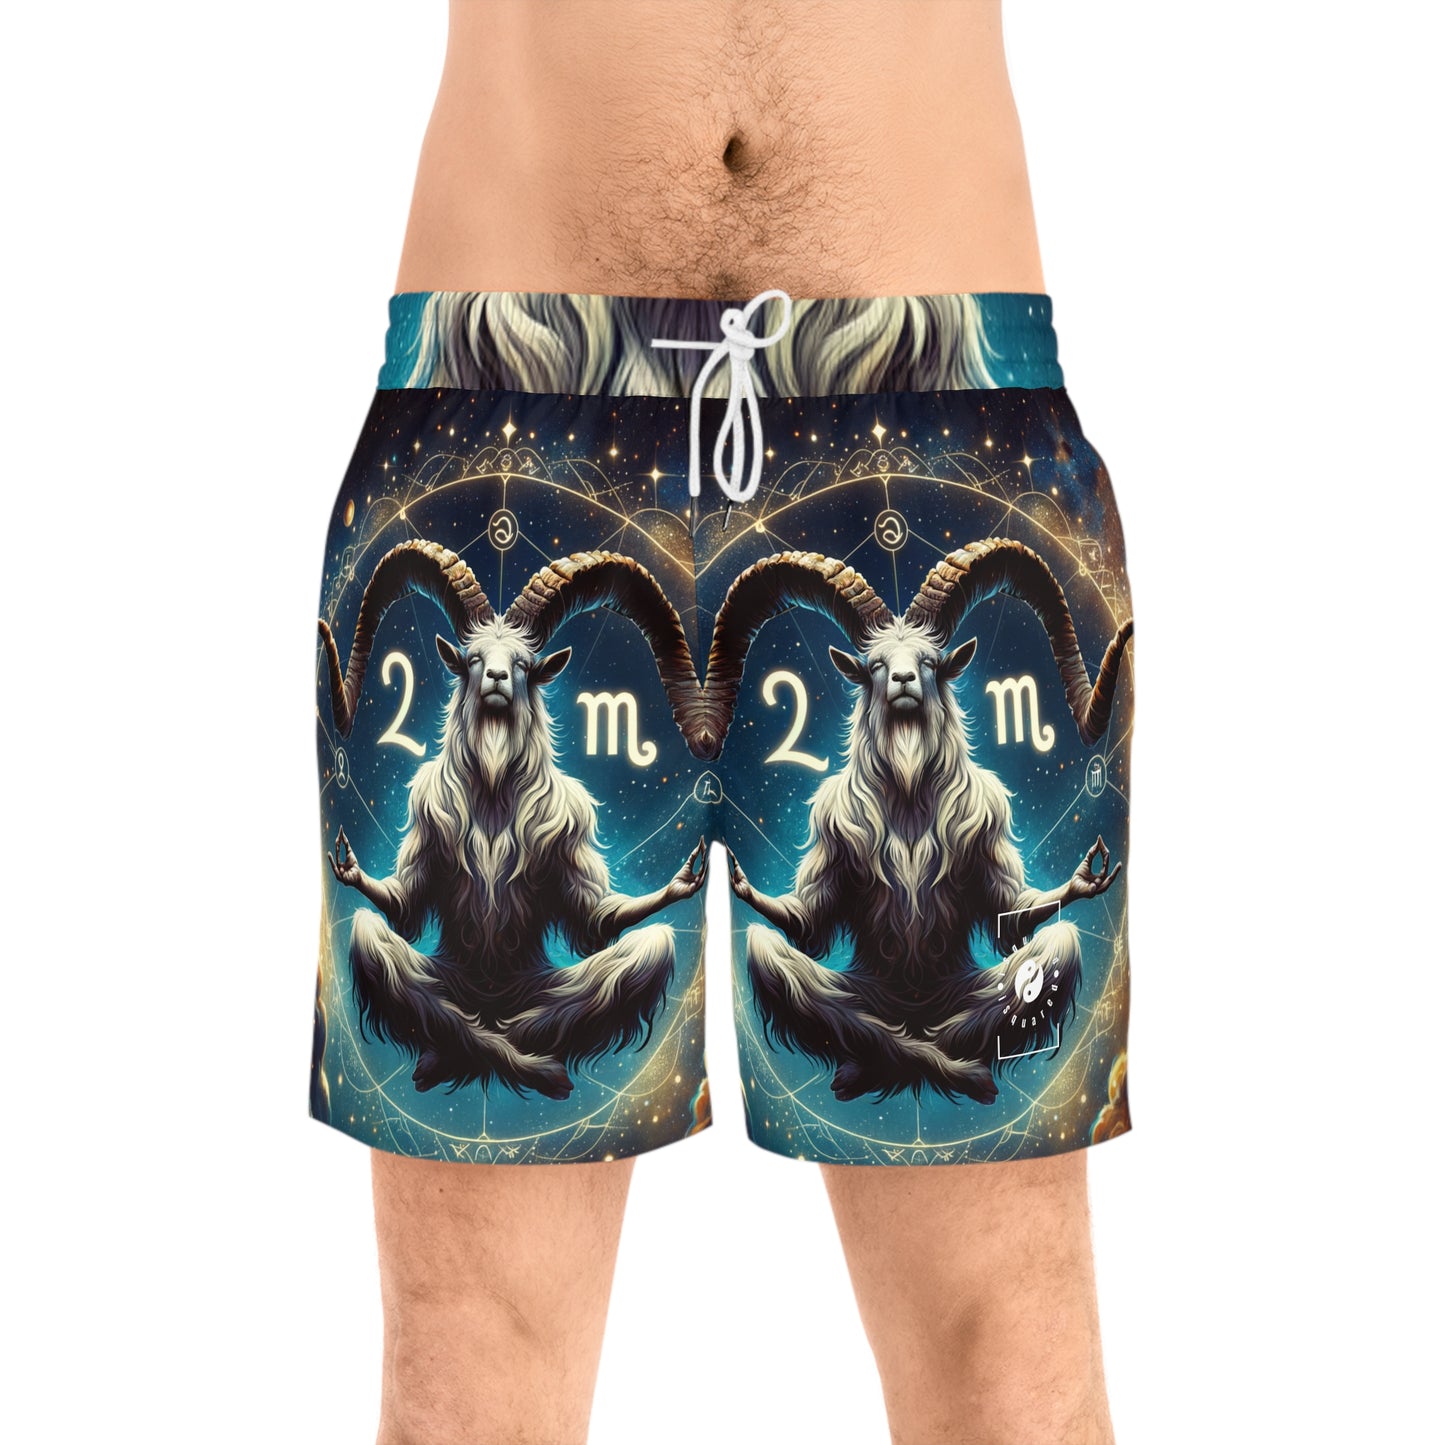 Audacious Capricorn - Swim Shorts (Mid-Length) for Men